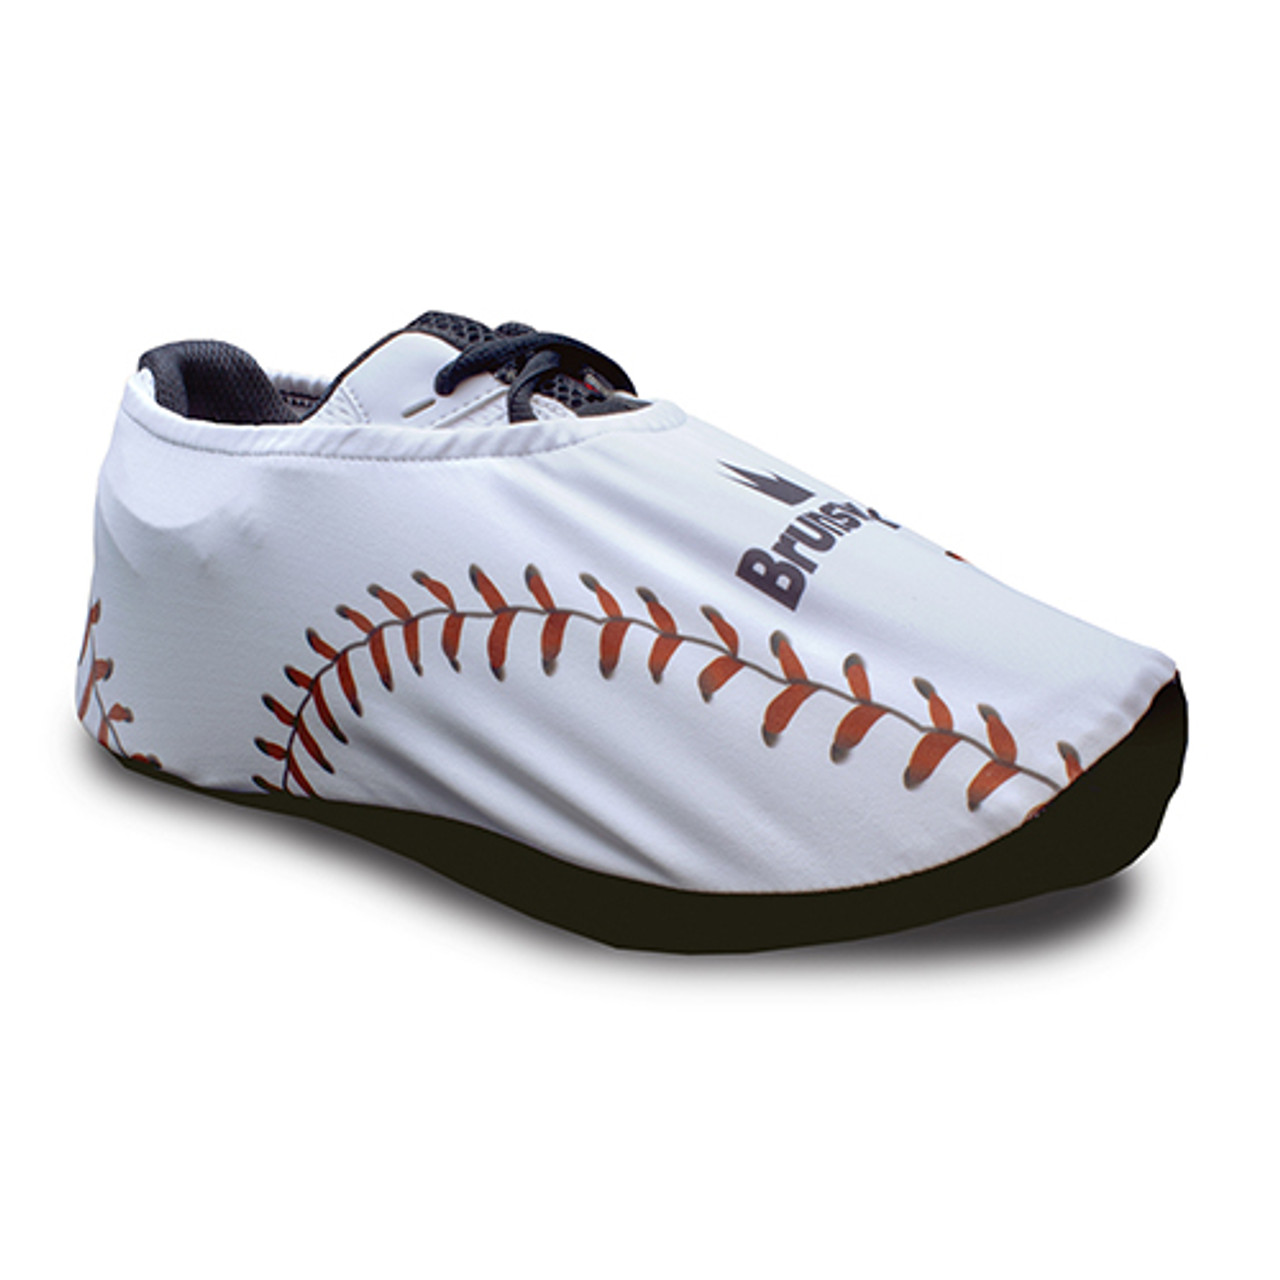 Brunswick Sport Series Shoe Covers - Baseball